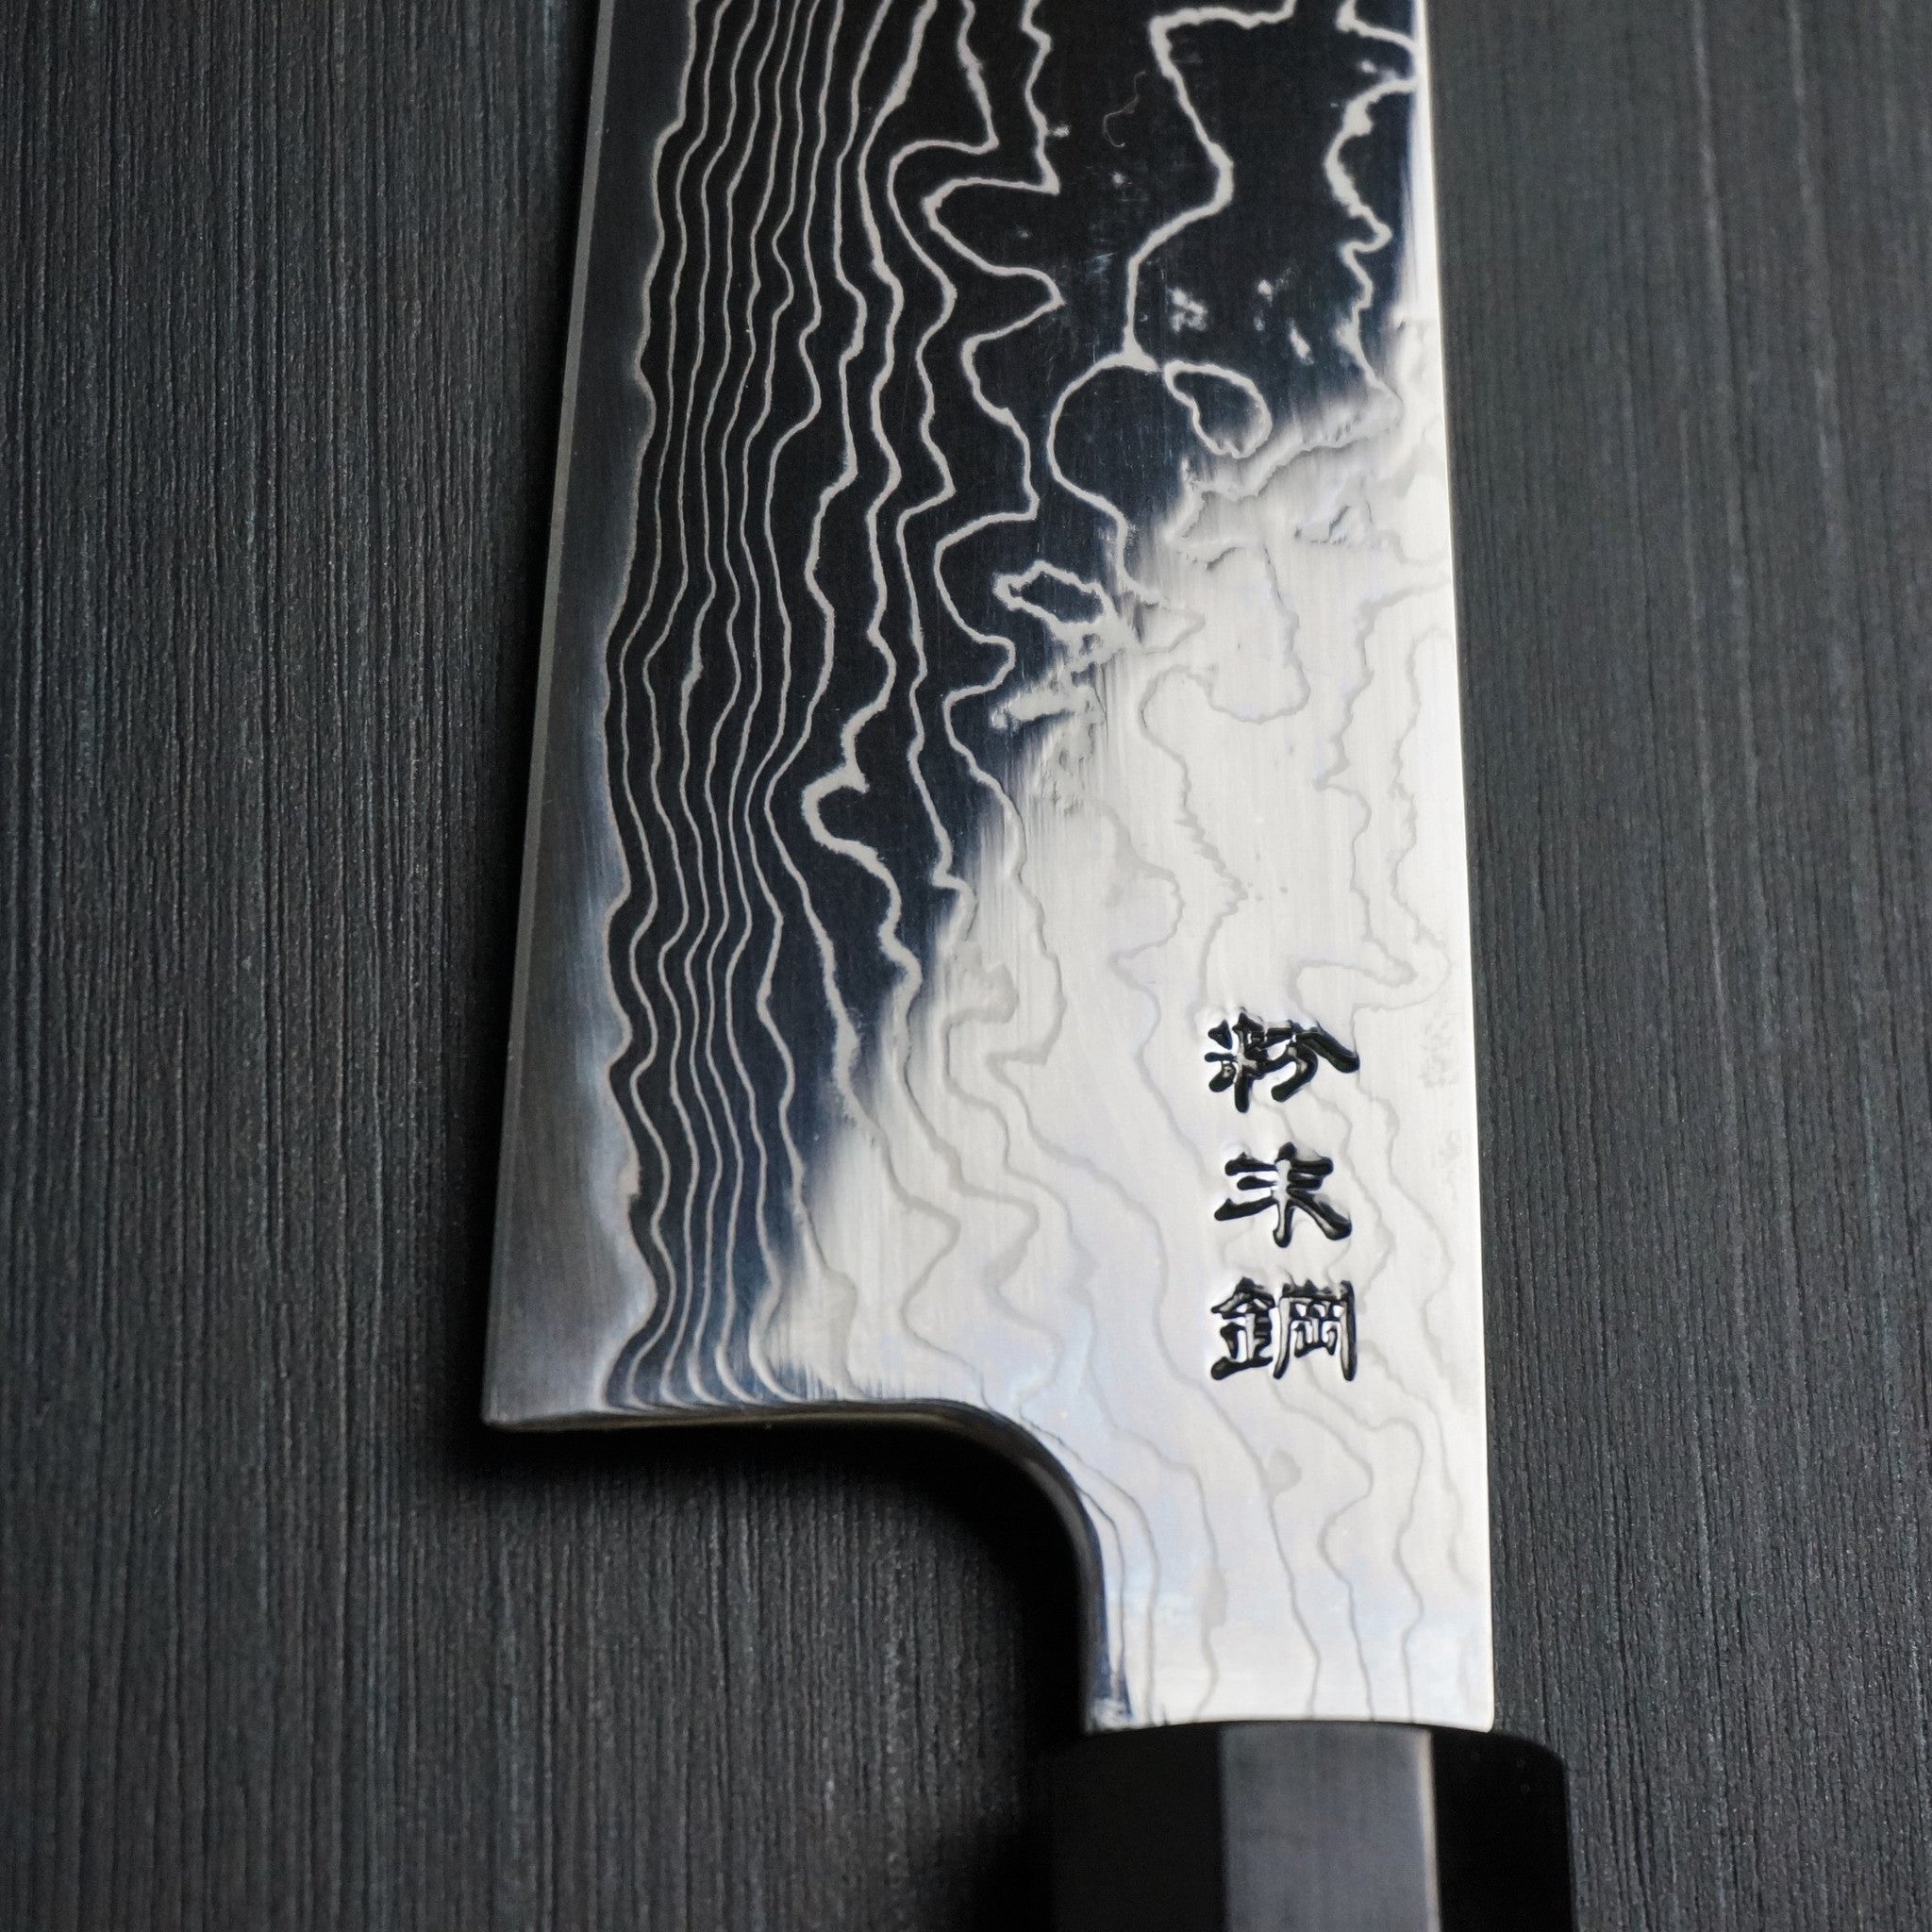 SpitJack Chef Knife. Japanese Damascus Feather Design Kitchen